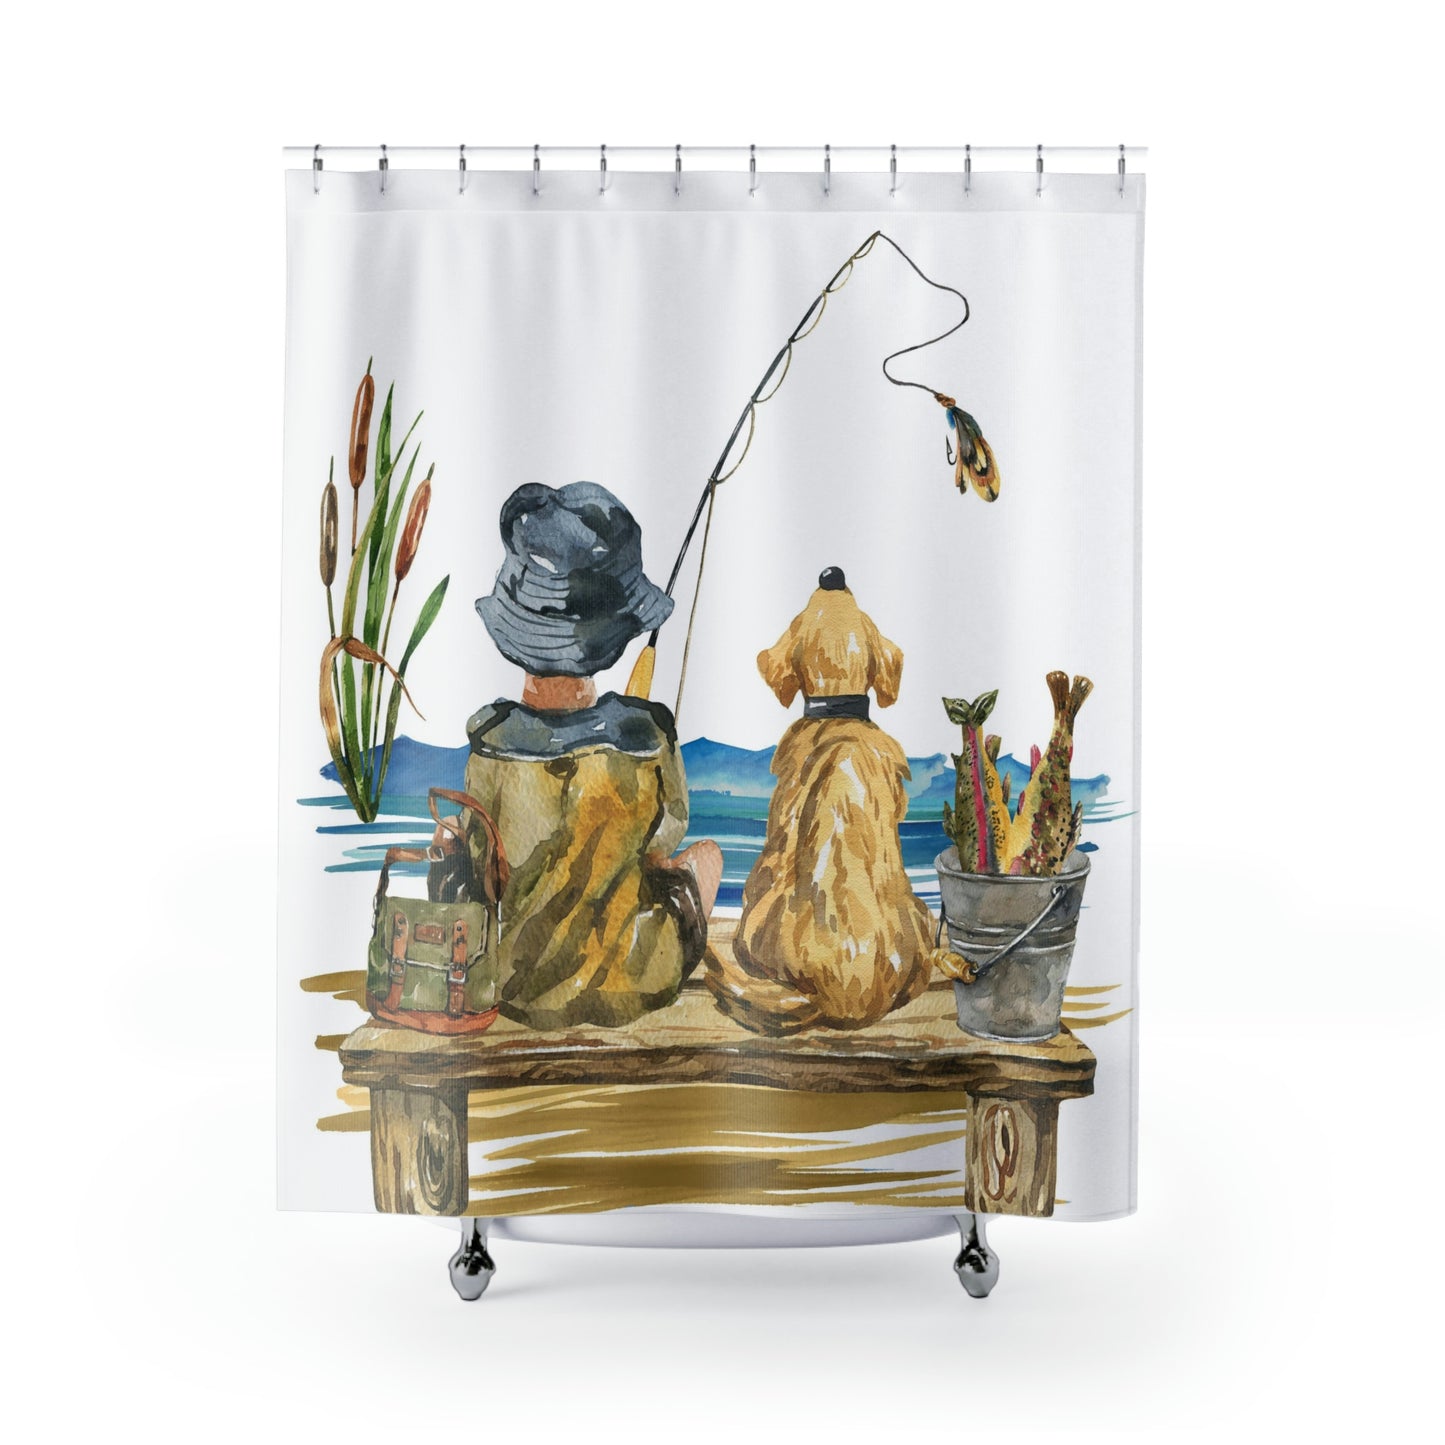 Fishing Shower Curtain, Fishing bathroom decor, Go fishing shower curtain - Sweet Fisherman